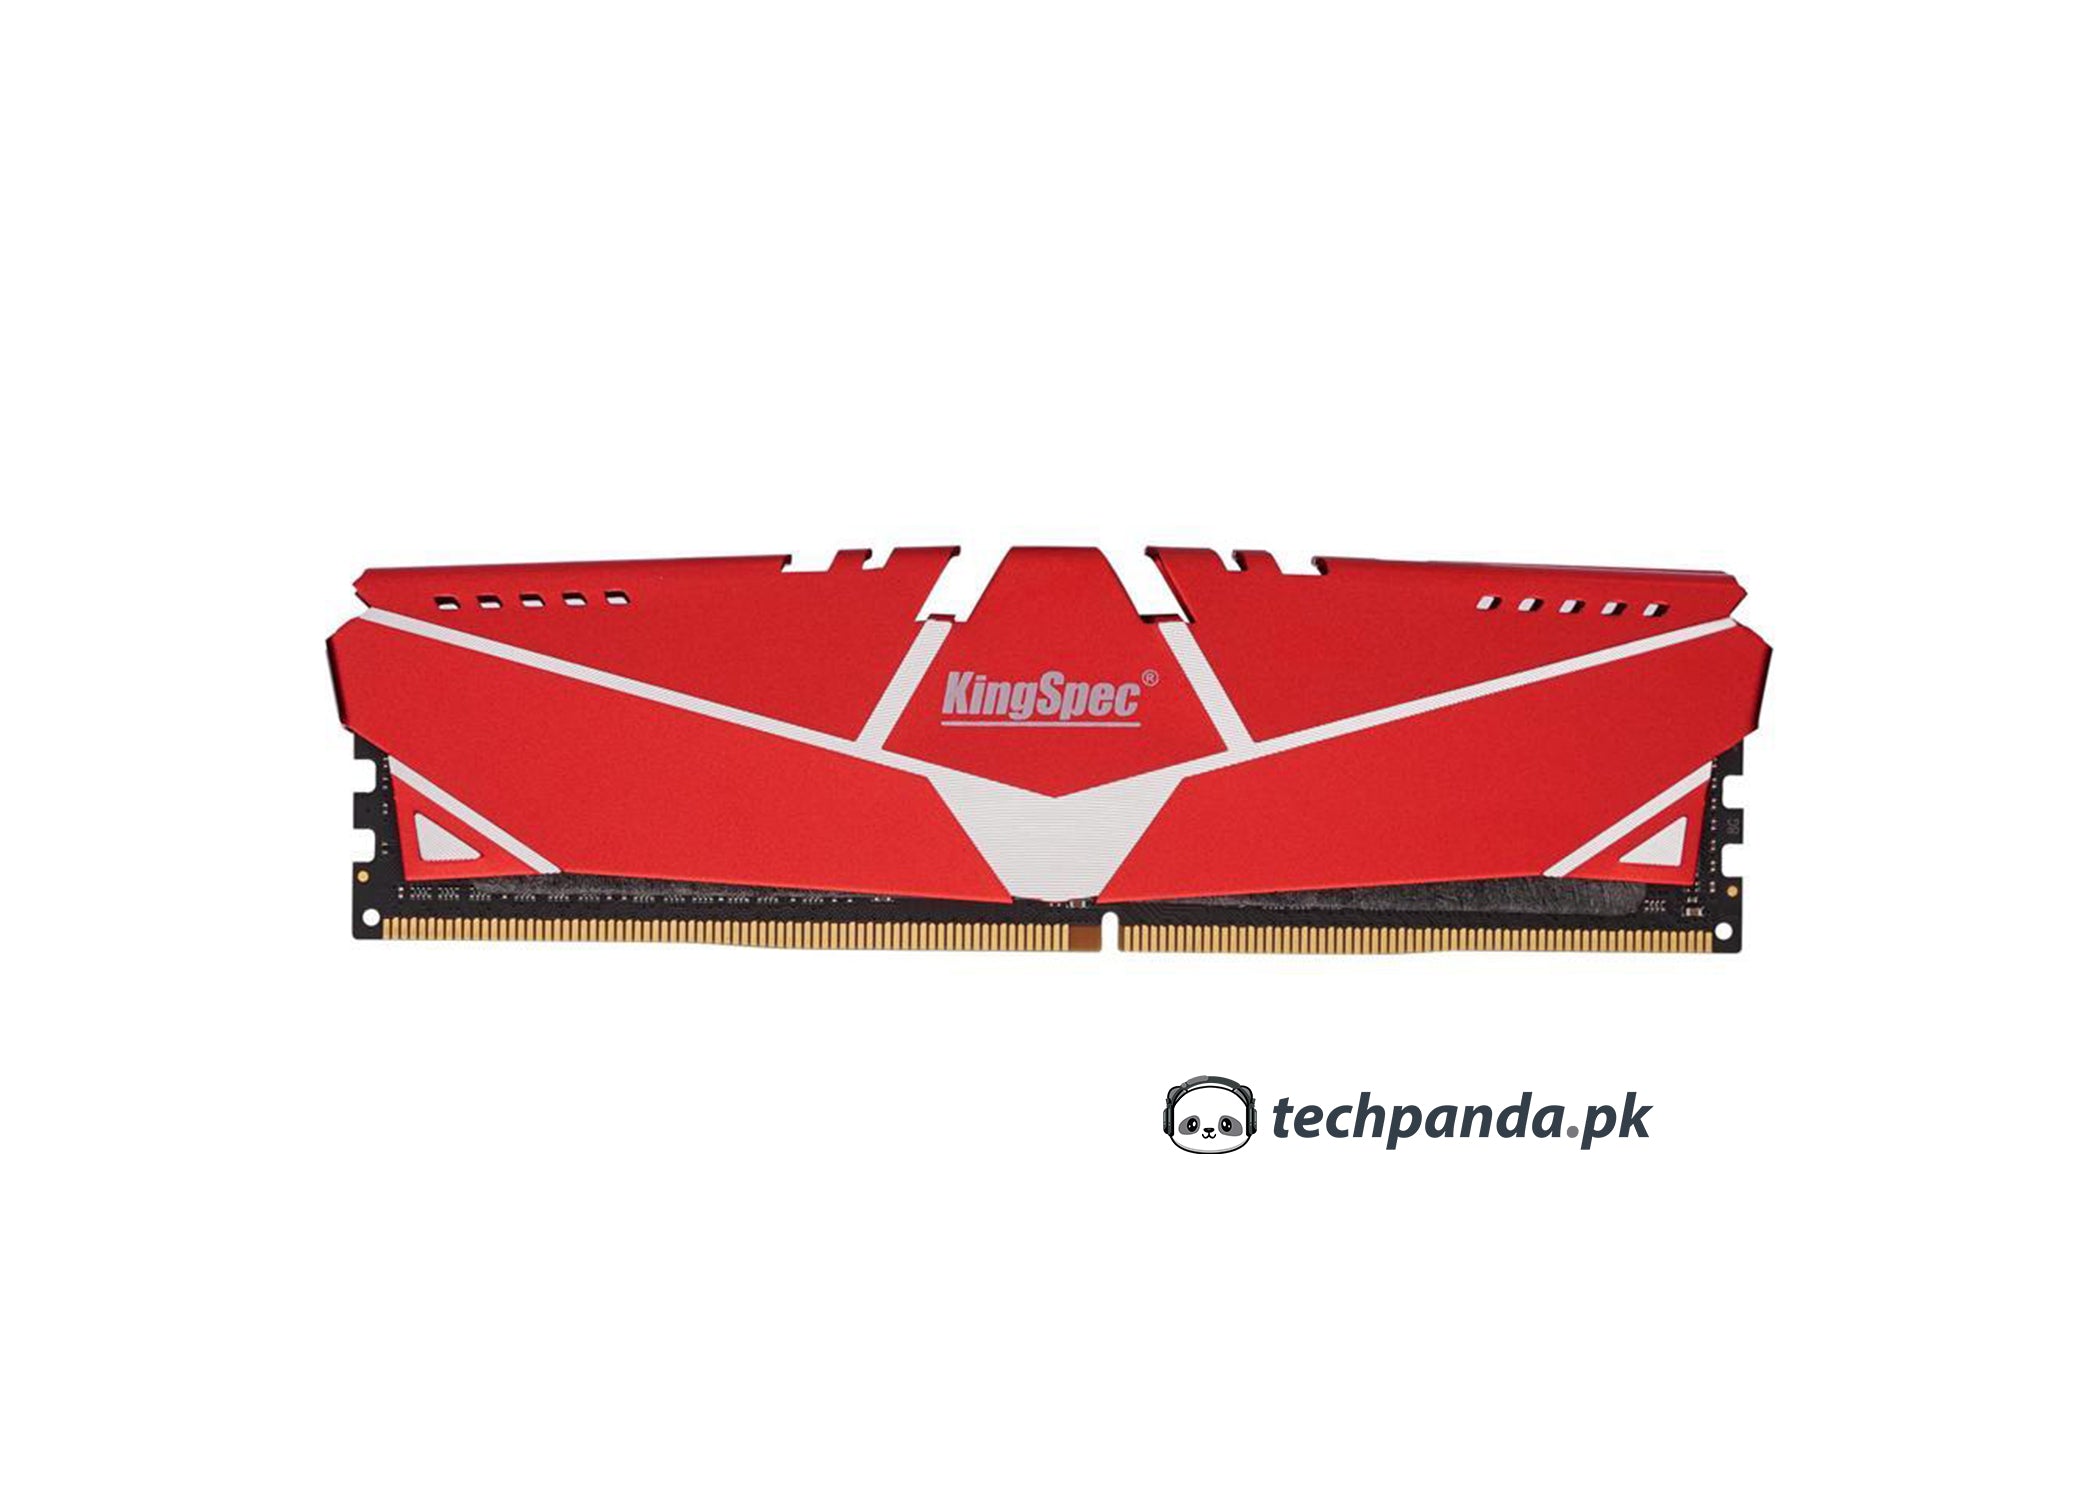 KingSpec DDR4 RAM 16GB Memory Module 3200 MHz 288-Pin UDIMM with Heatsink for Computer Desktop PC Memories Module Gaming